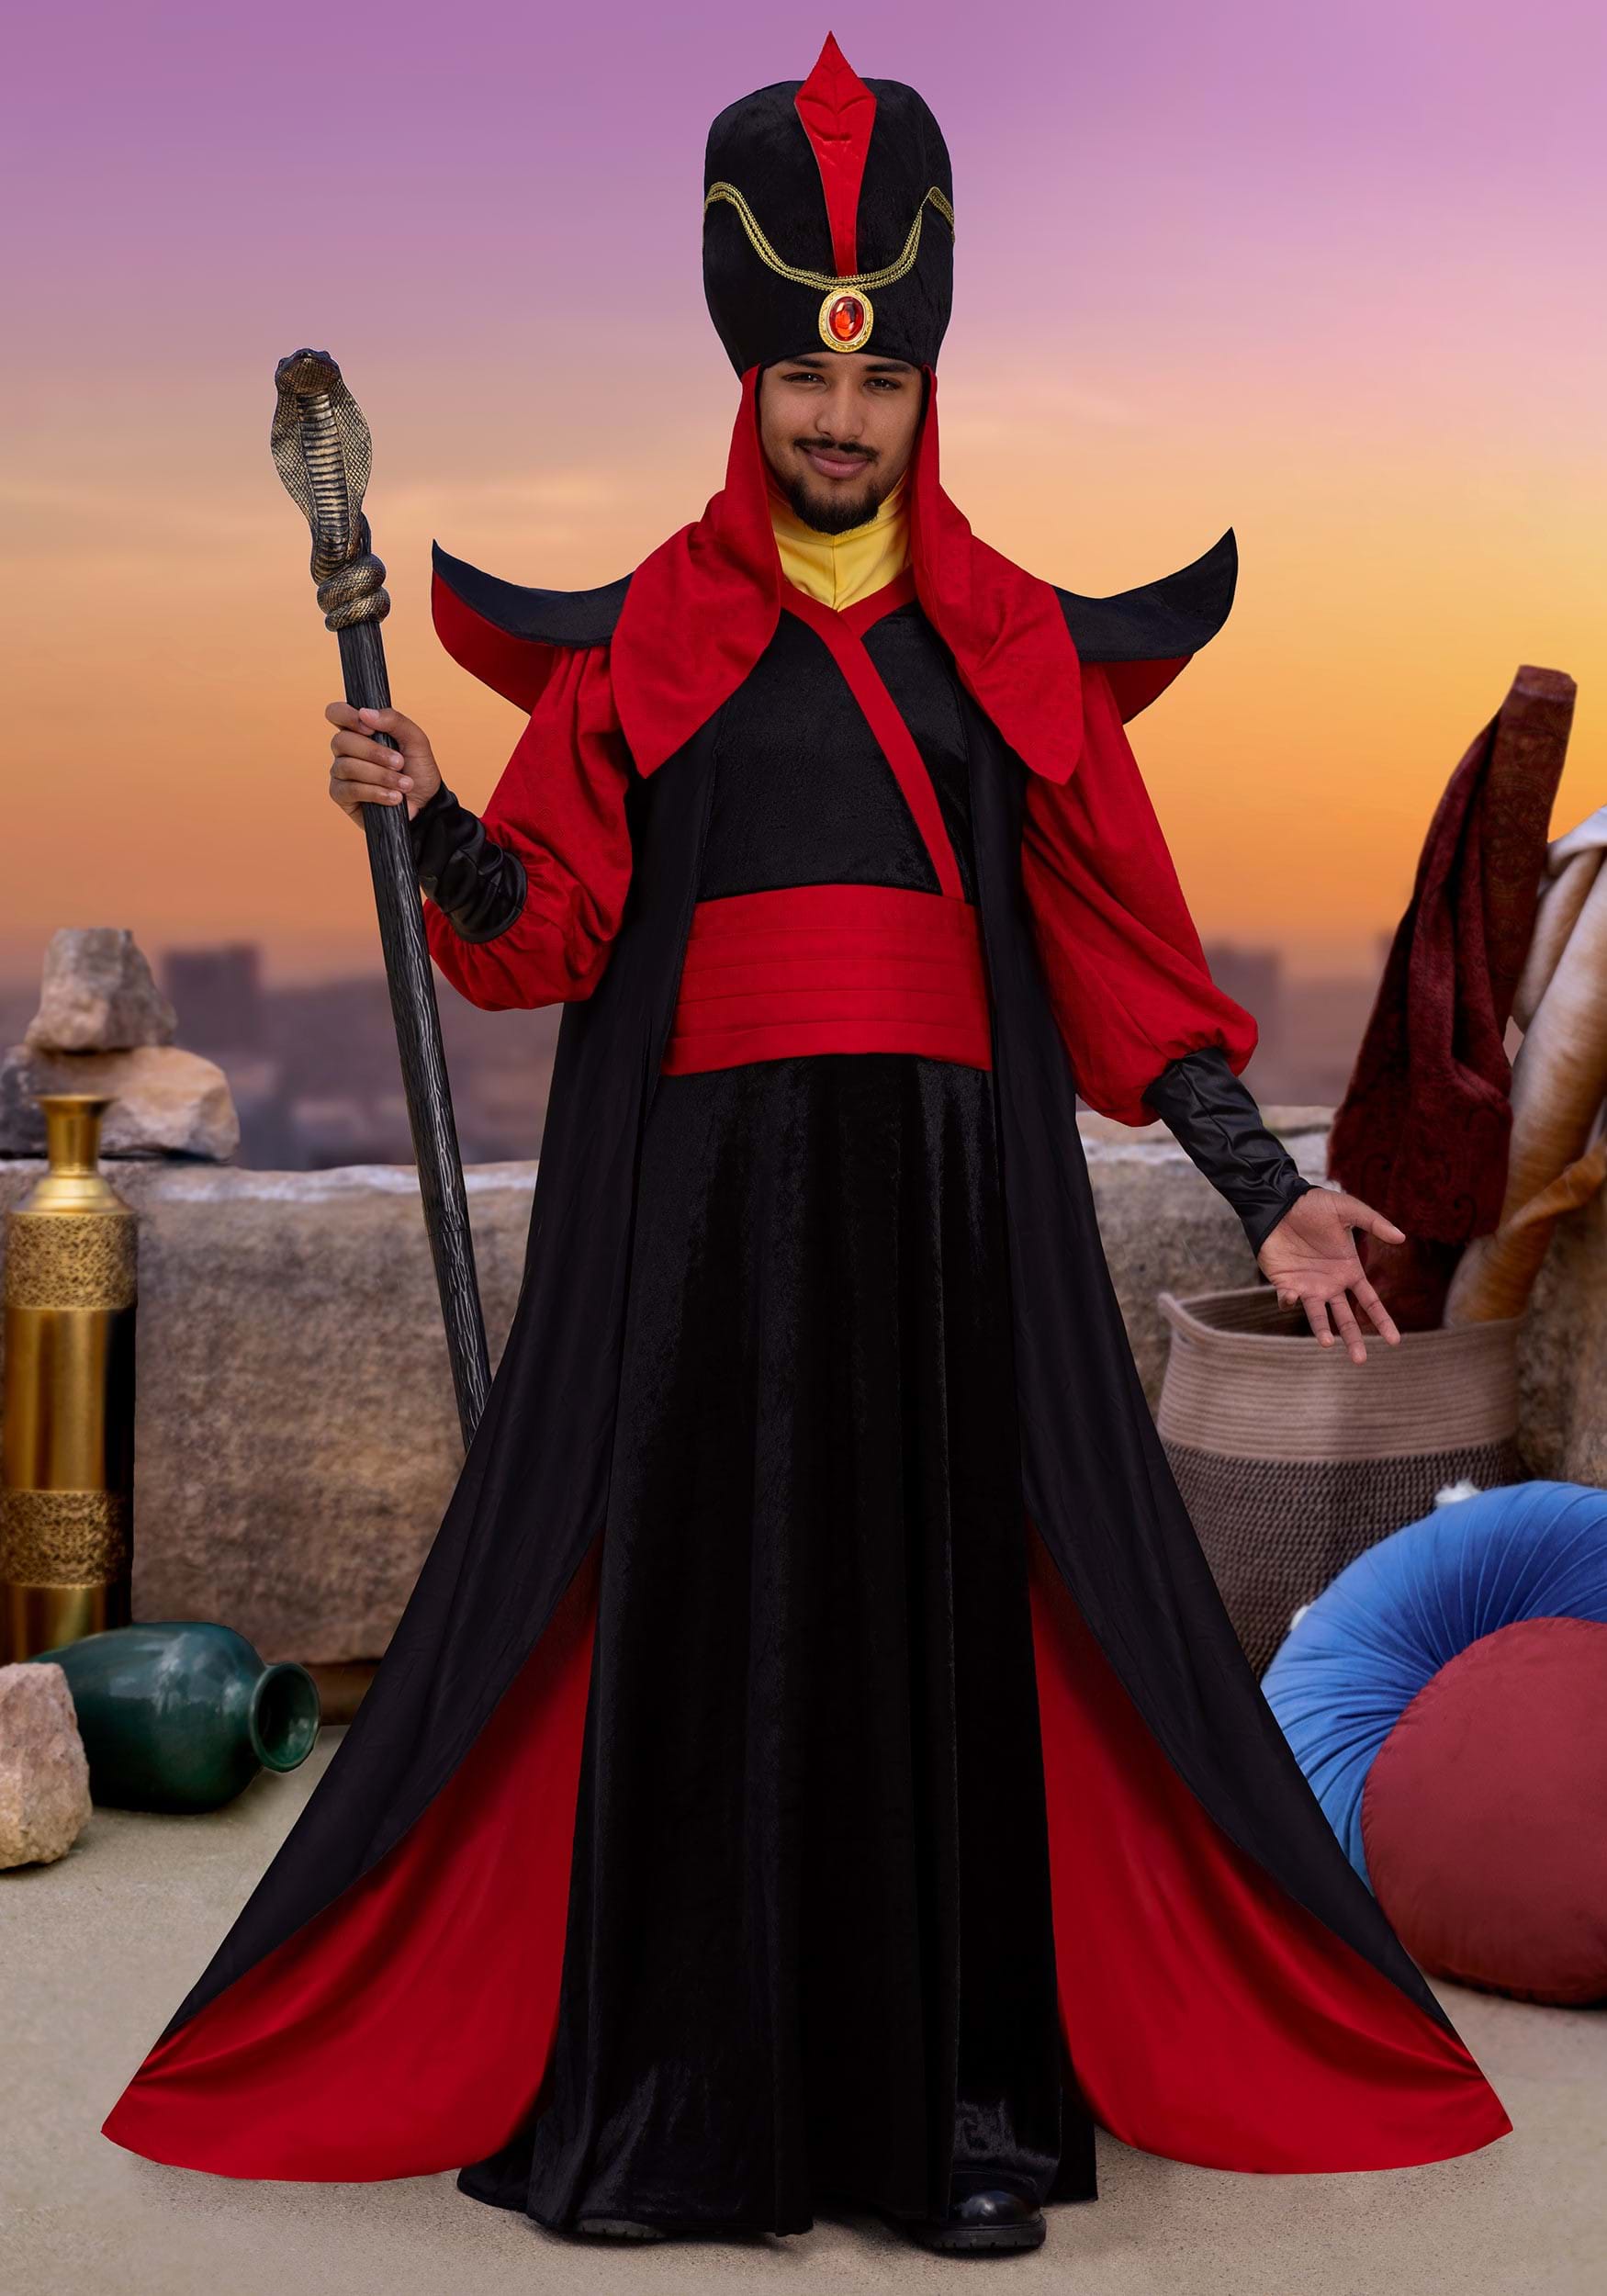 Jafar costume